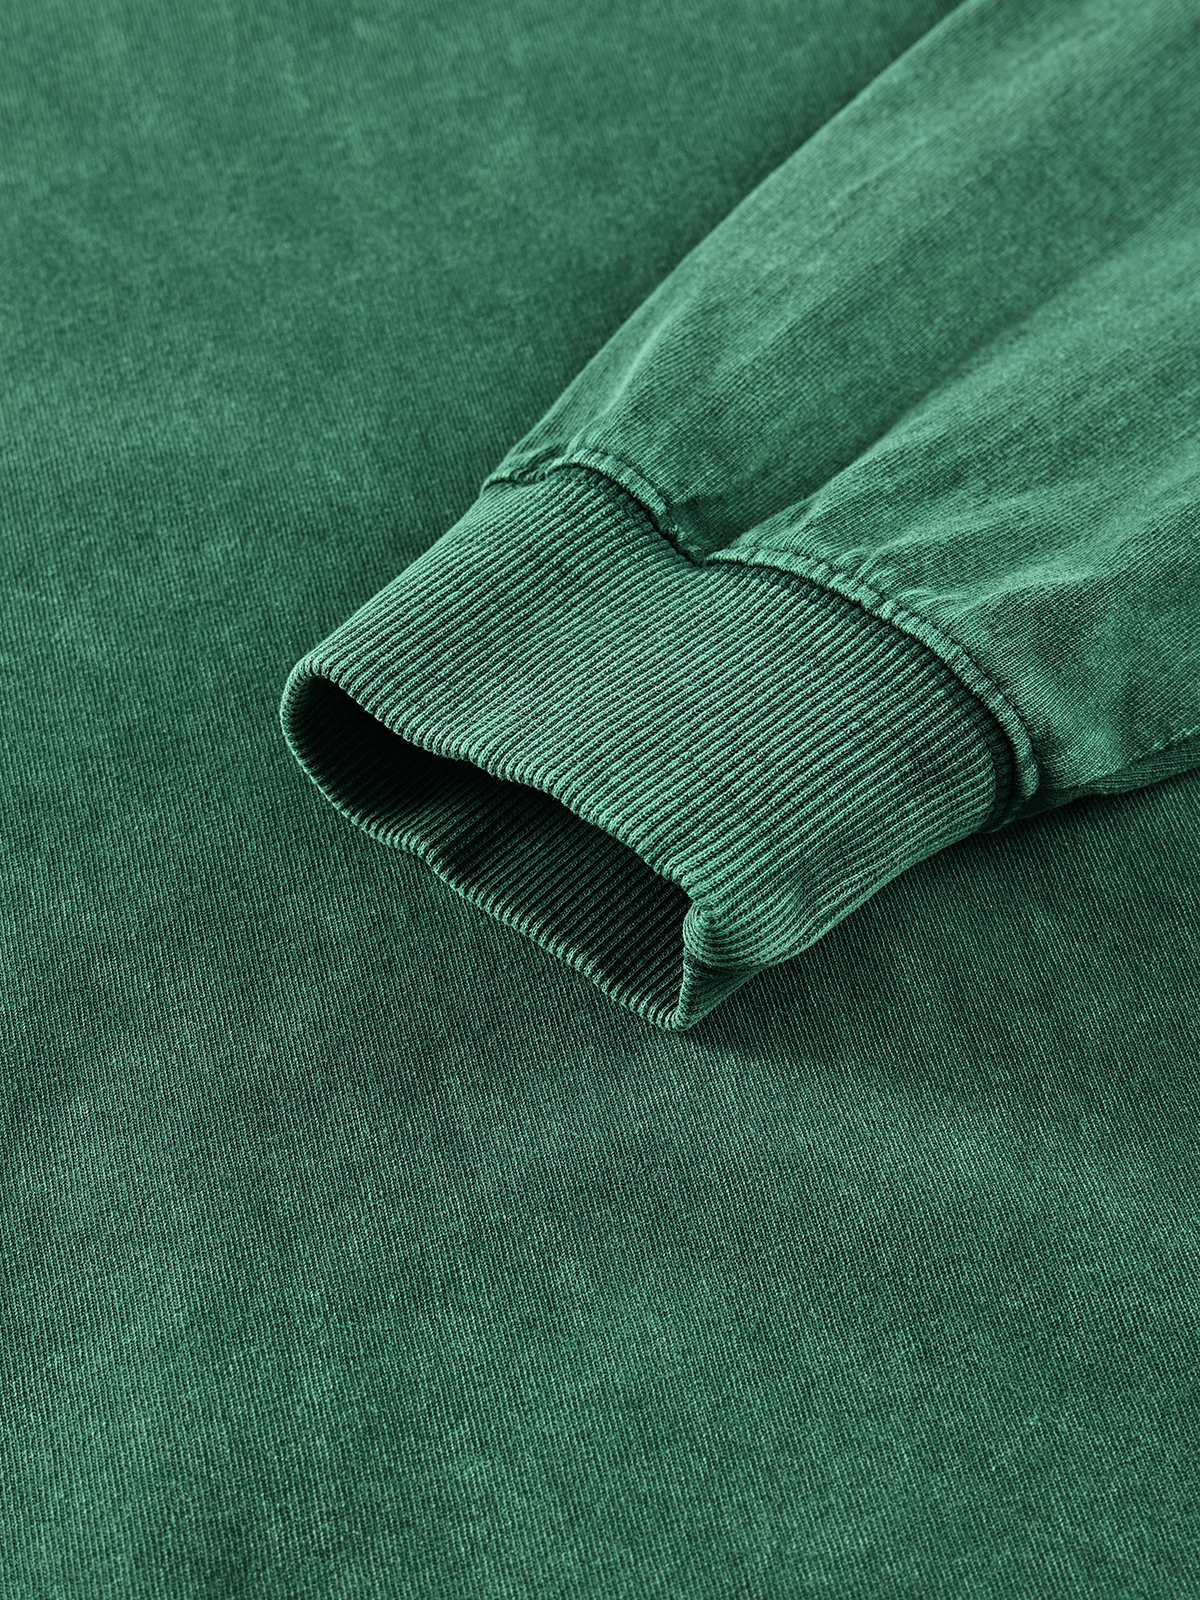 Simple Long Sleeved Sweatshirt - Hoodies & Sweatshirts - Uniqistic.com